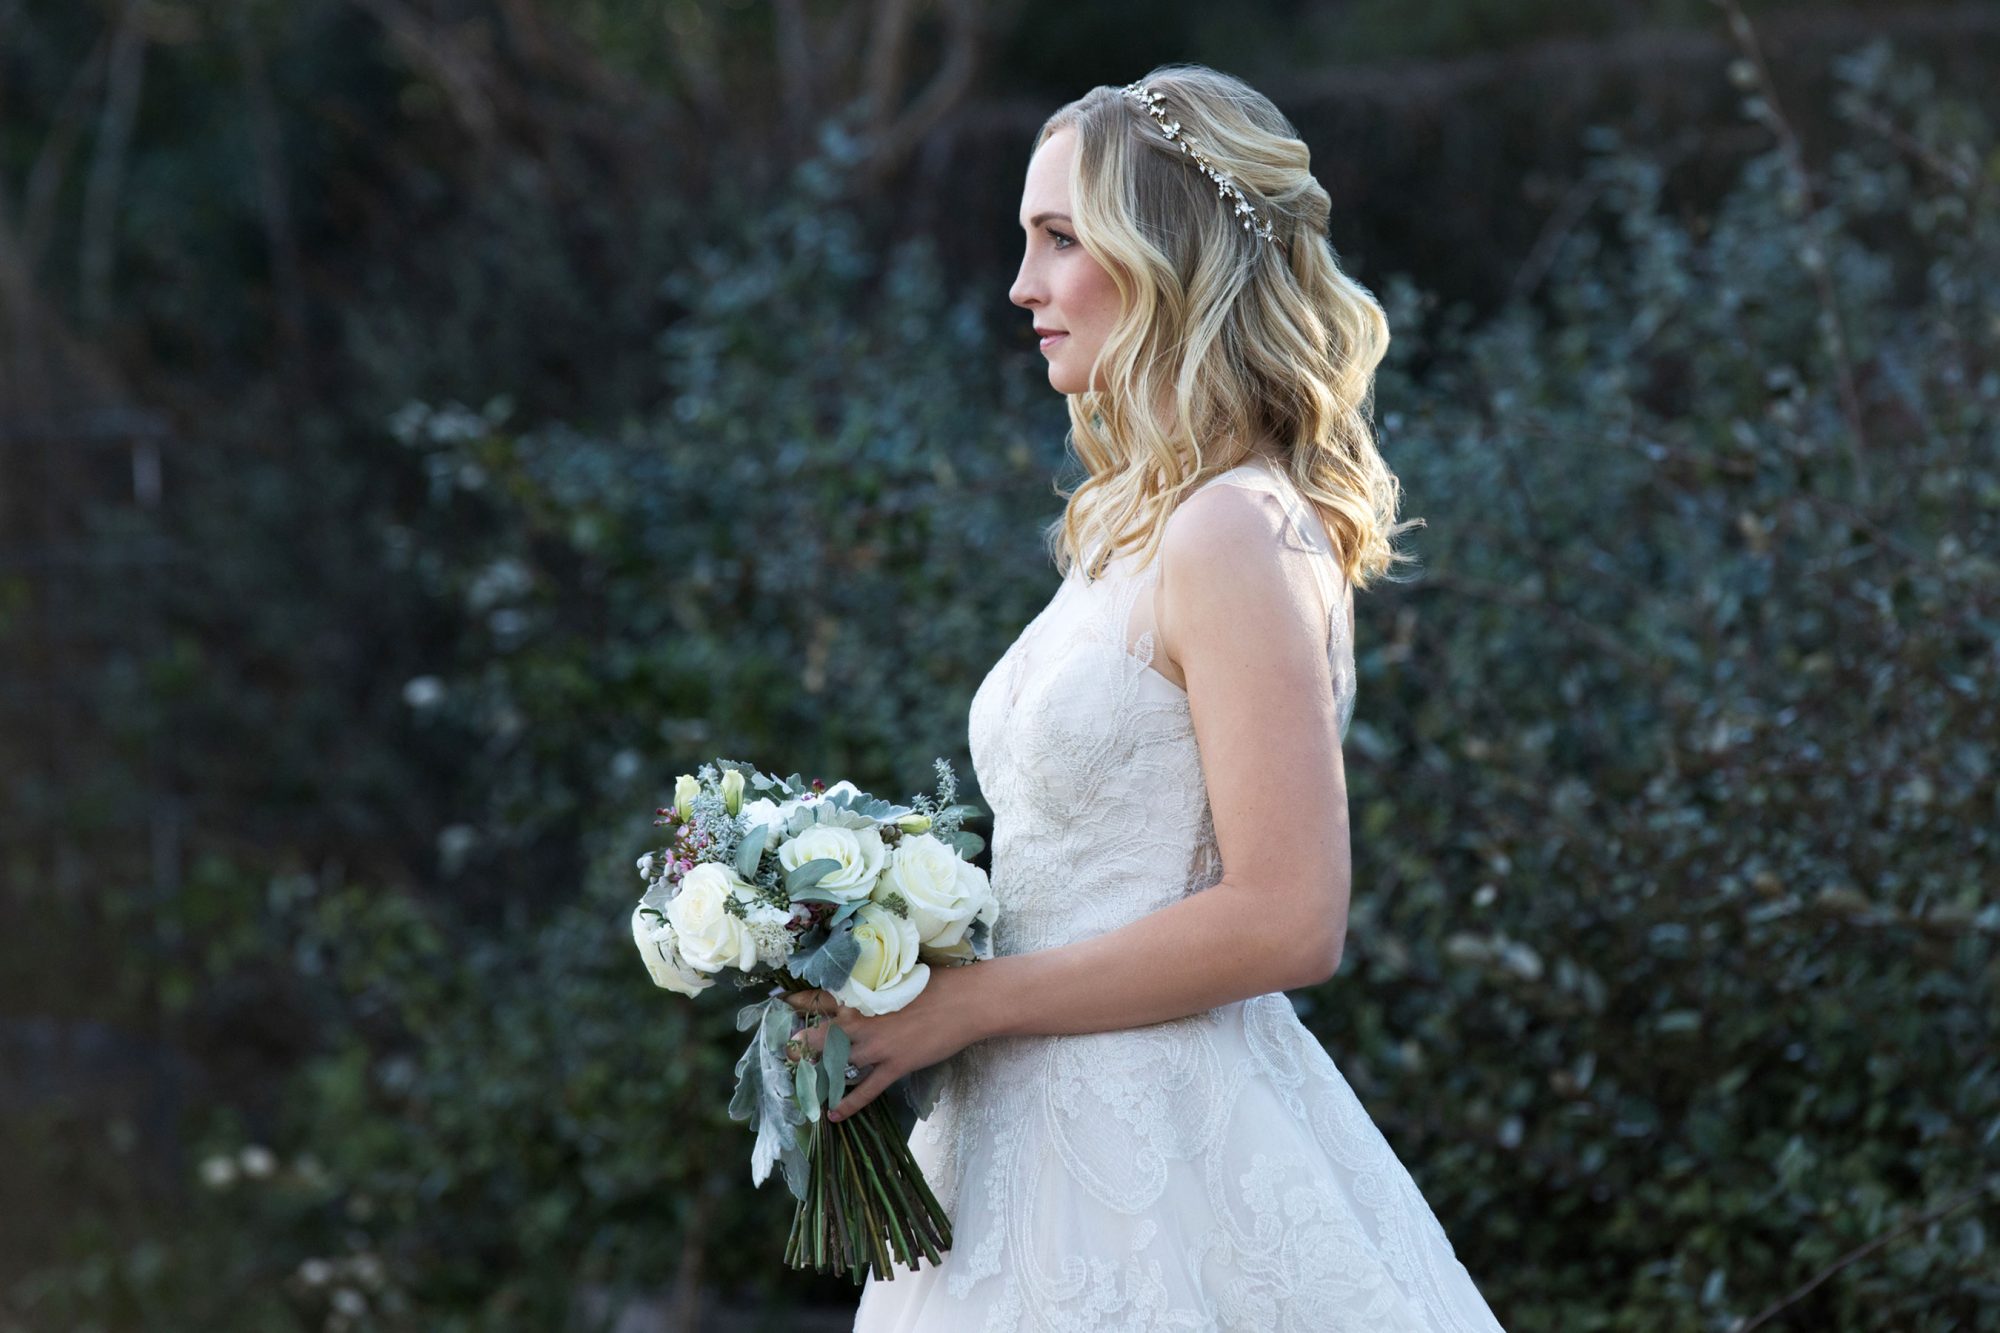 Vampire Diaries: New photo of Stefan and Caroline's wedding